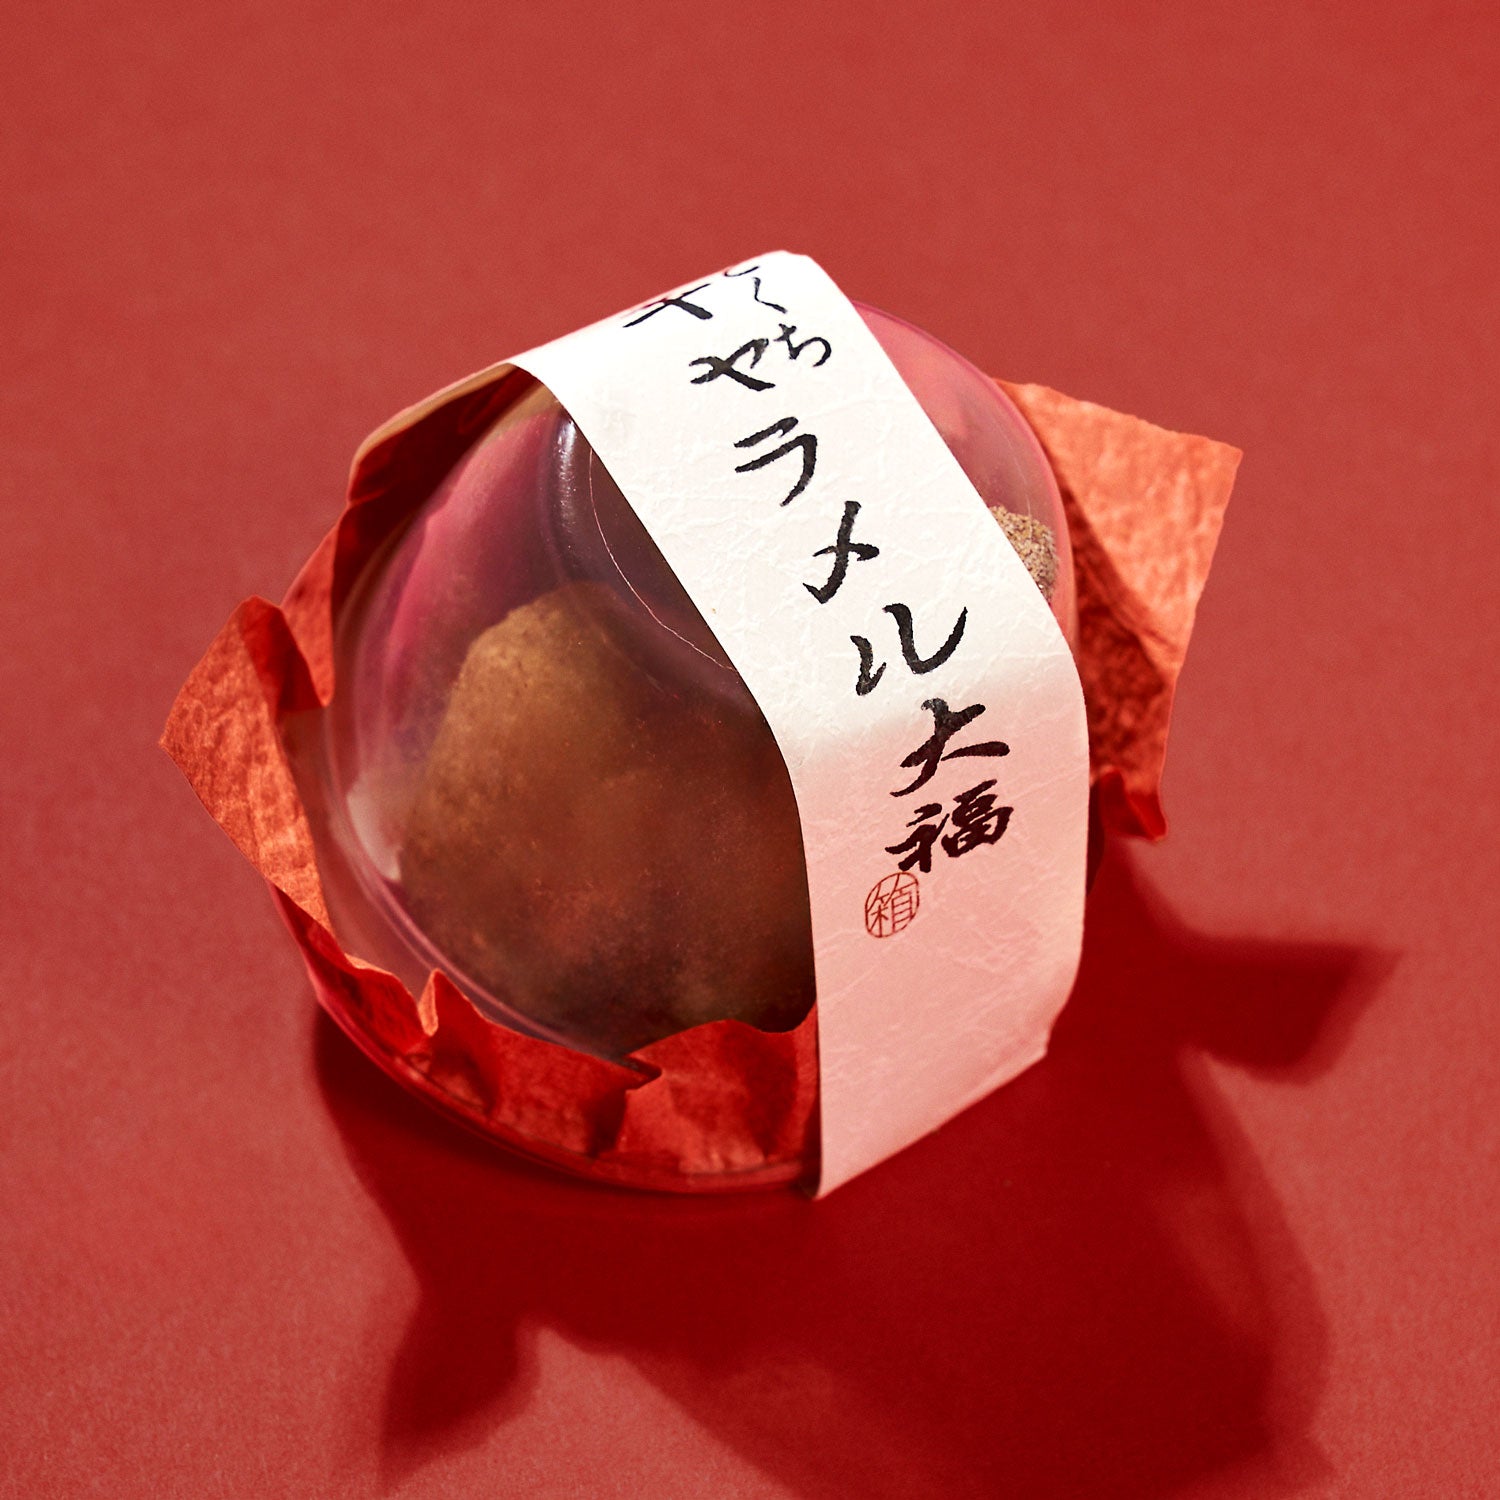 Kit Kat - Daifuku Mochi - Mini - 10 Piece Bag